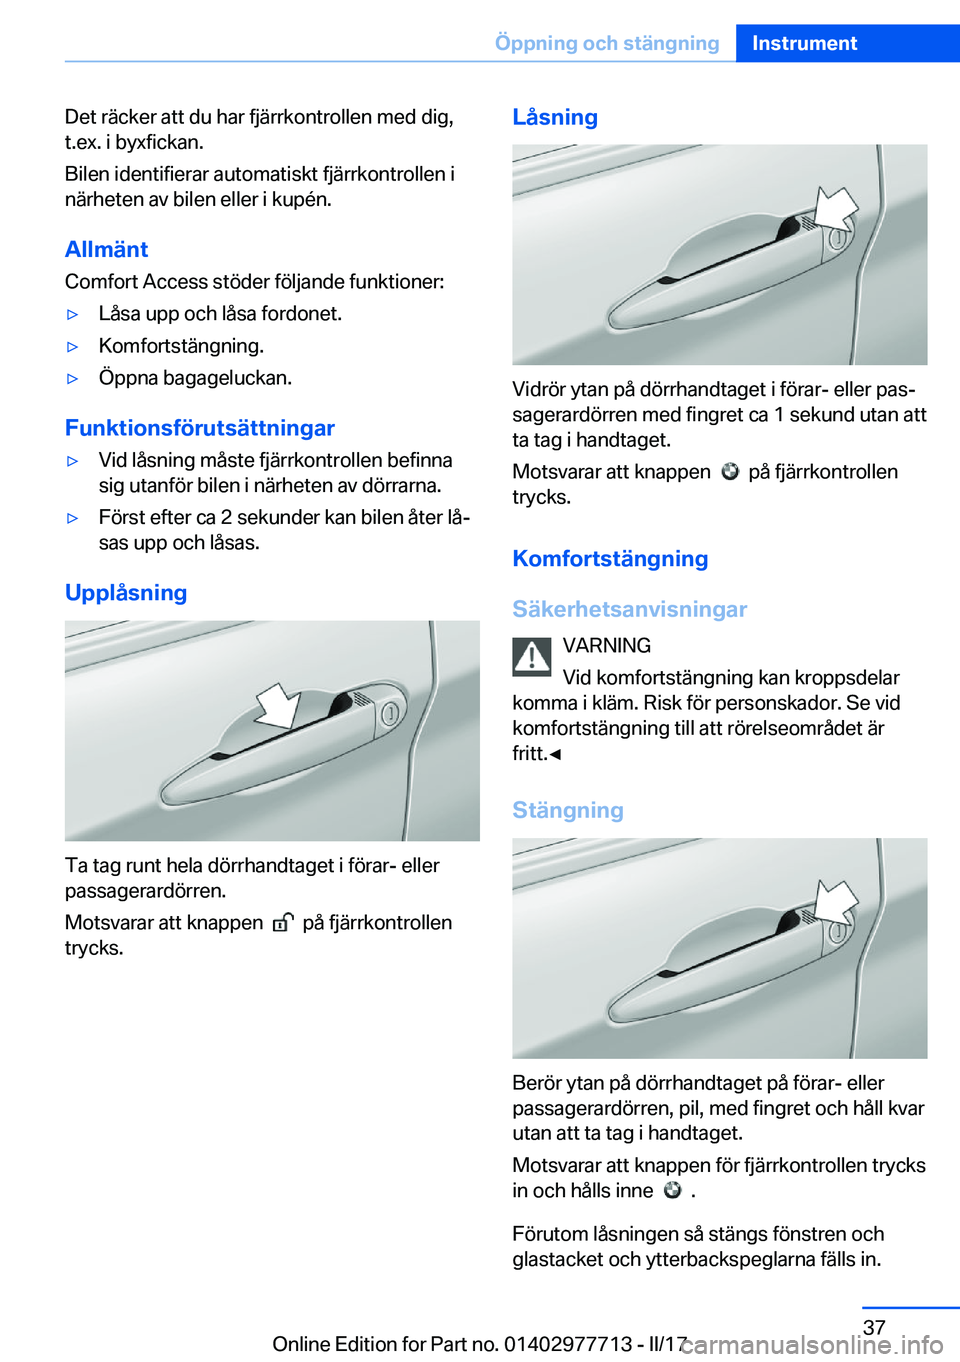 BMW 2 SERIES COUPE 2017  InstruktionsbÖcker (in Swedish) �D�e�t� �r�ä�c�k�e�r� �a�t�t� �d�u� �h�a�r� �f�j�ä�r�r�k�o�n�t�r�o�l�l�e�n� �m�e�d� �d�i�g�,
�t�.�e�x�.� �i� �b�y�x�f�i�c�k�a�n�.
�B�i�l�e�n� �i�d�e�n�t�i�f�i�e�r�a�r� �a�u�t�o�m�a�t�i�s�k�t� �f�j��